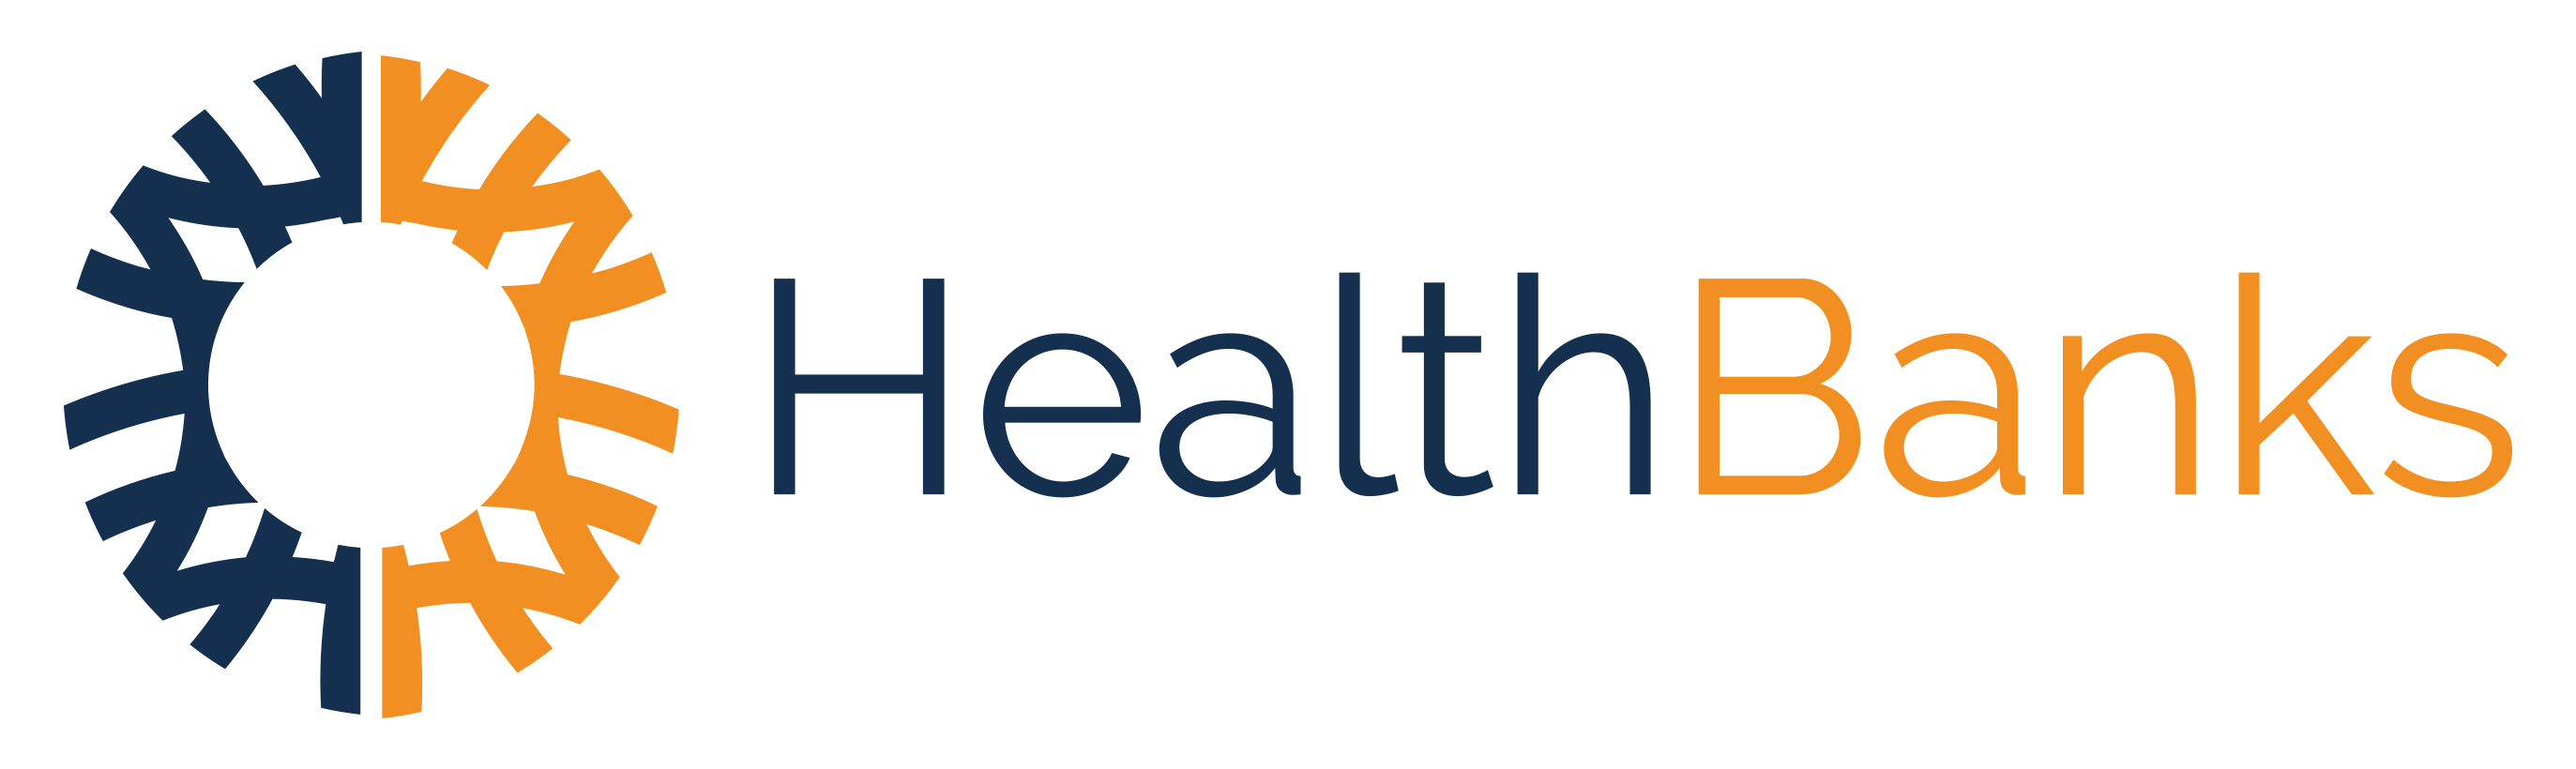 HealthBanks-logo-horiz-color-1